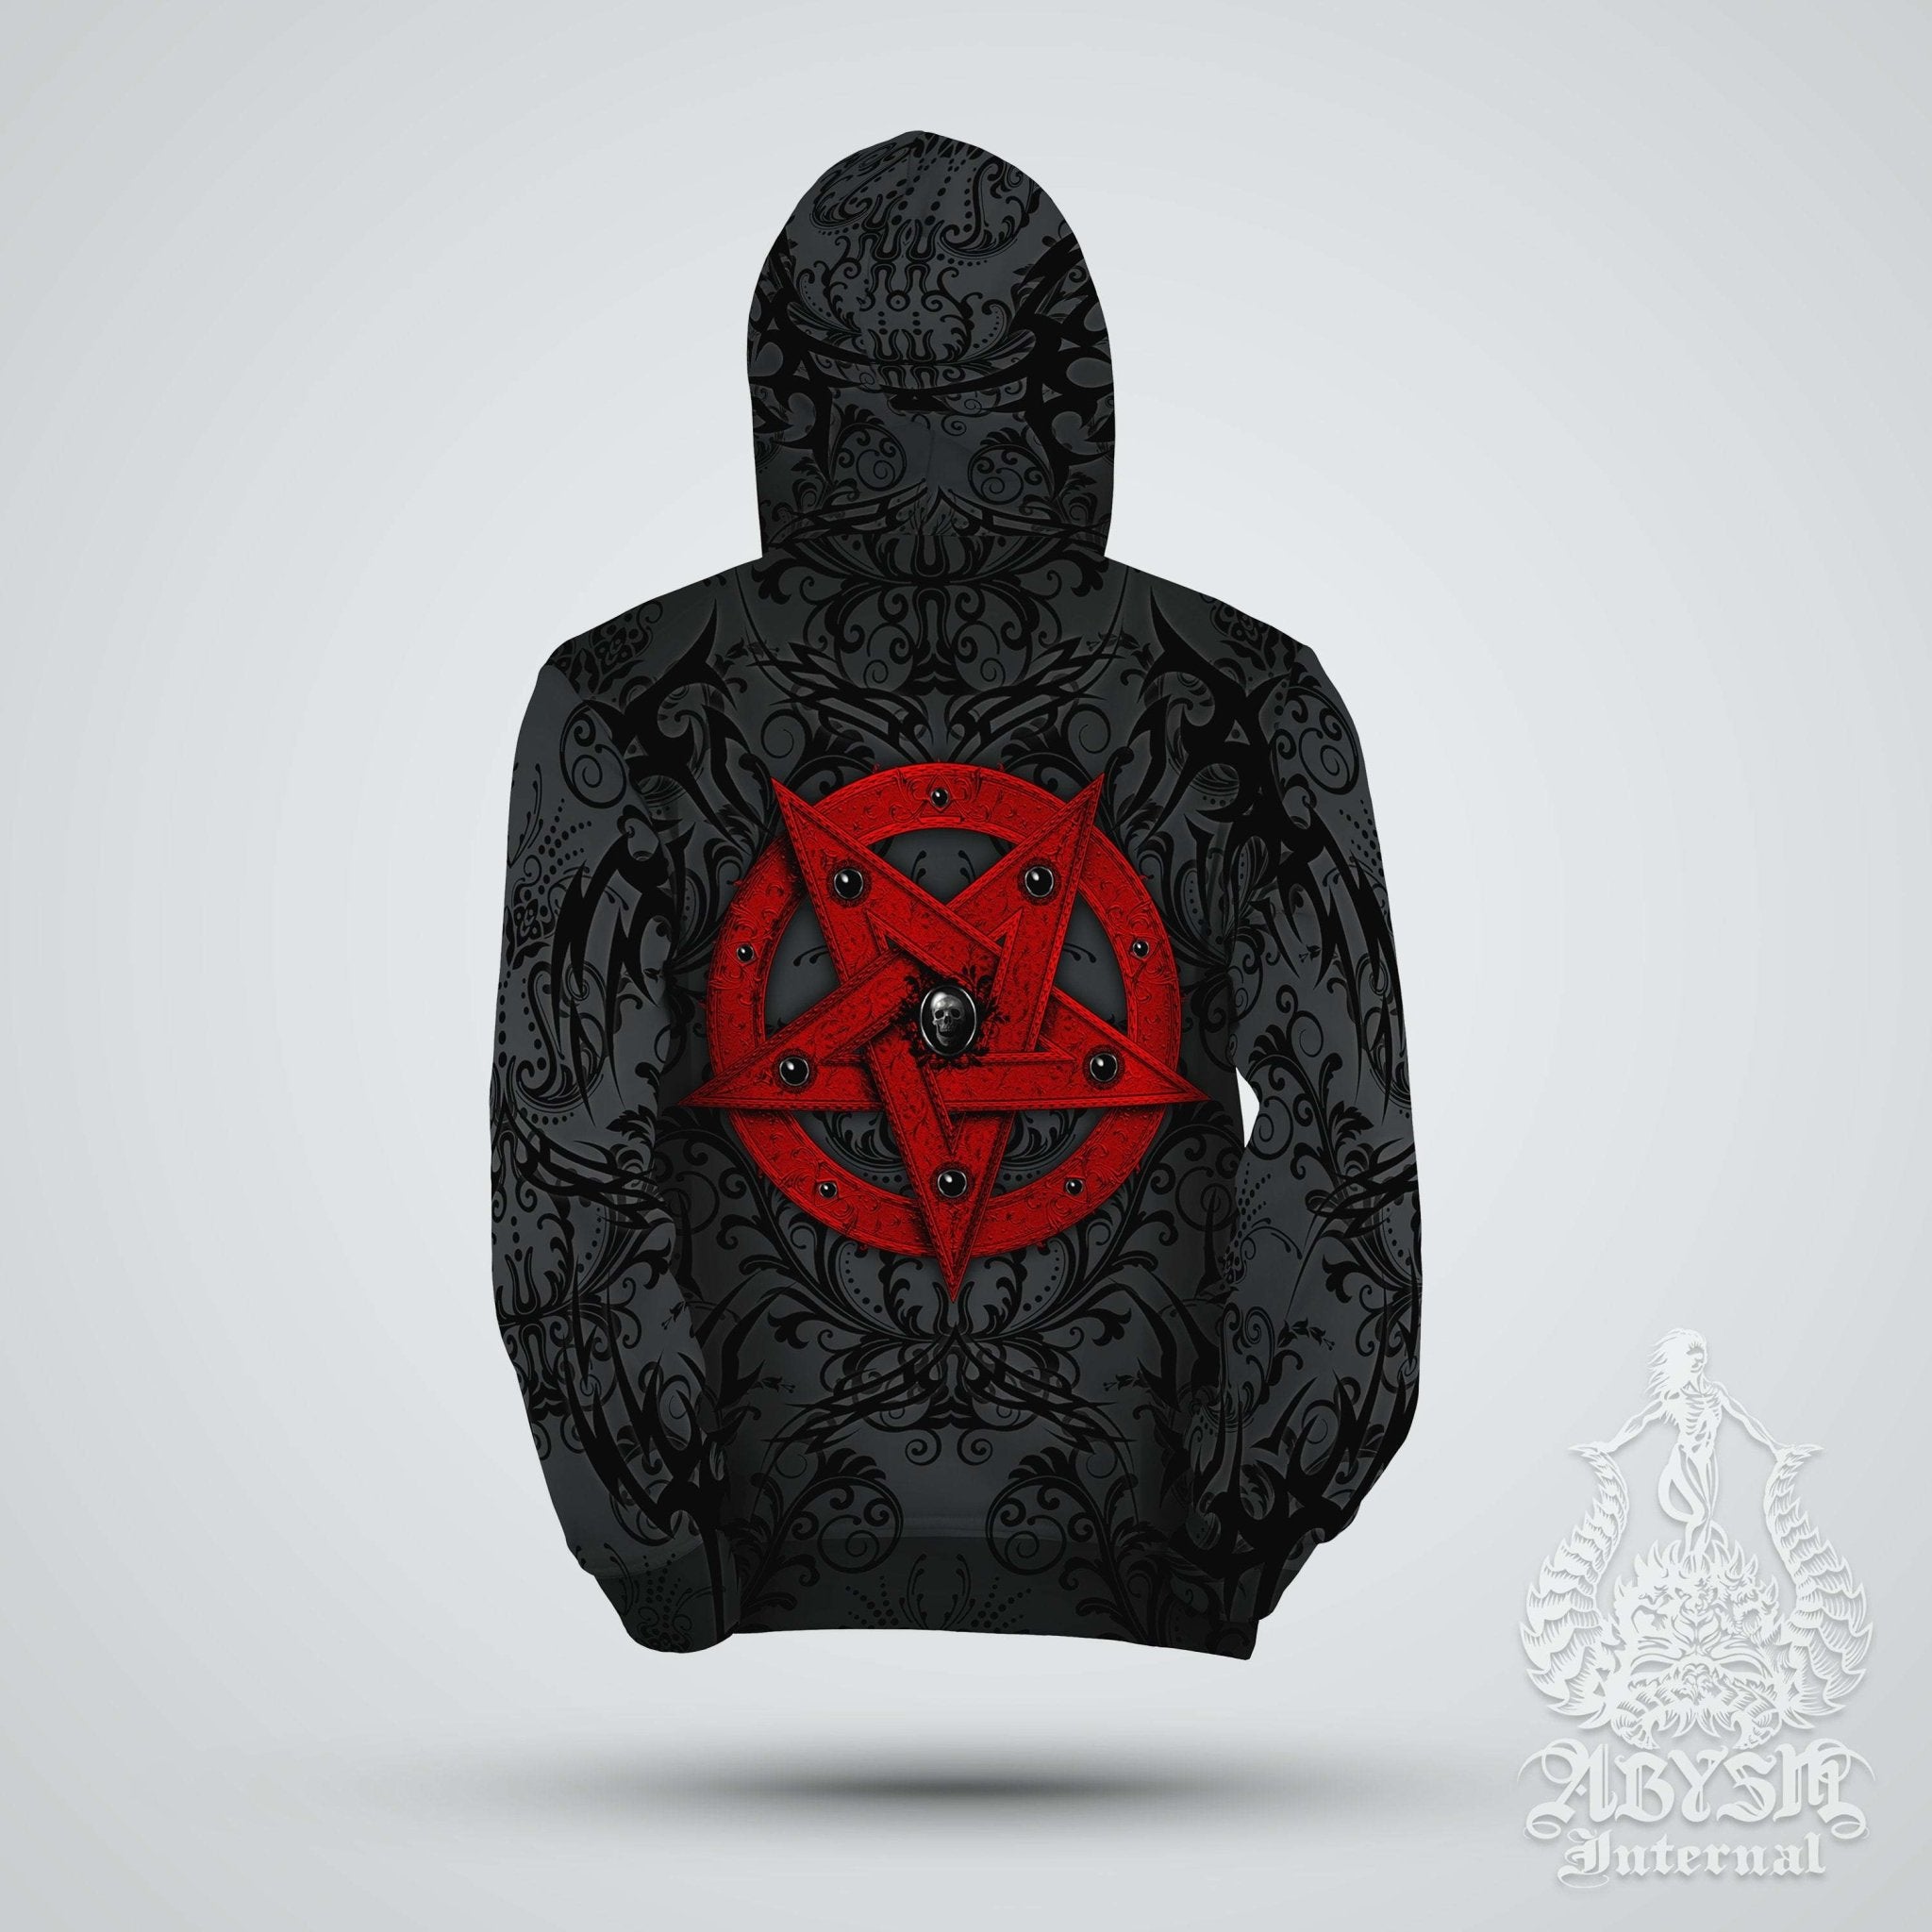 Pentagram Hoodie, Black Metal Streetwear, Gothic Sweater, Satanic Goth Outfit, Alternative Clothing, Unisex - Red Black - Abysm Internal